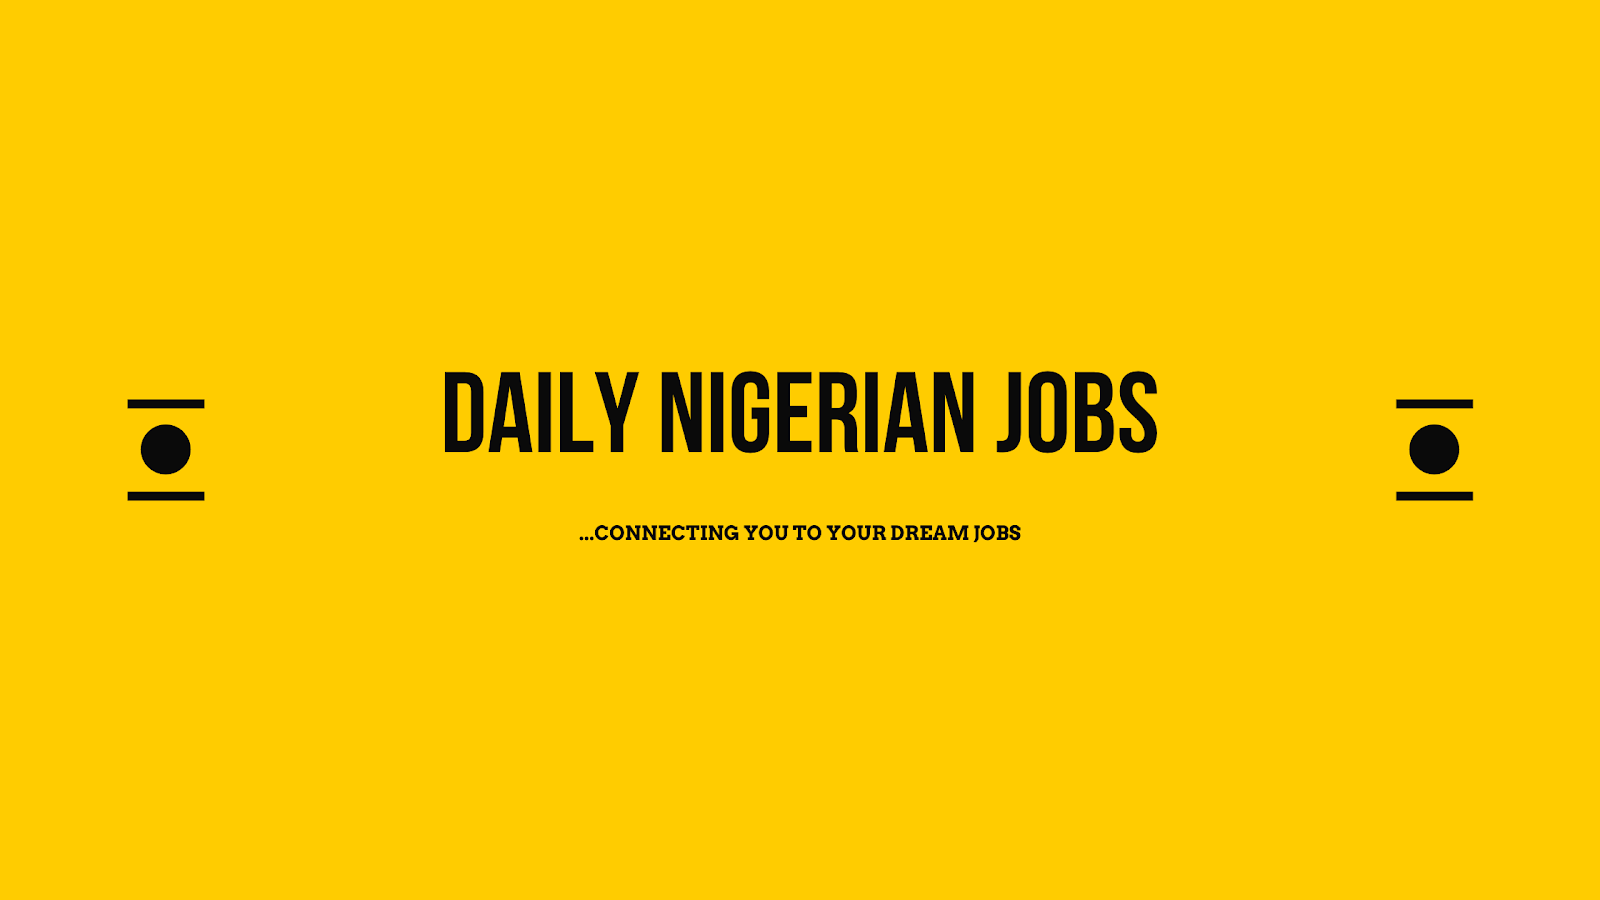 DAILY NIGERIAN JOBS